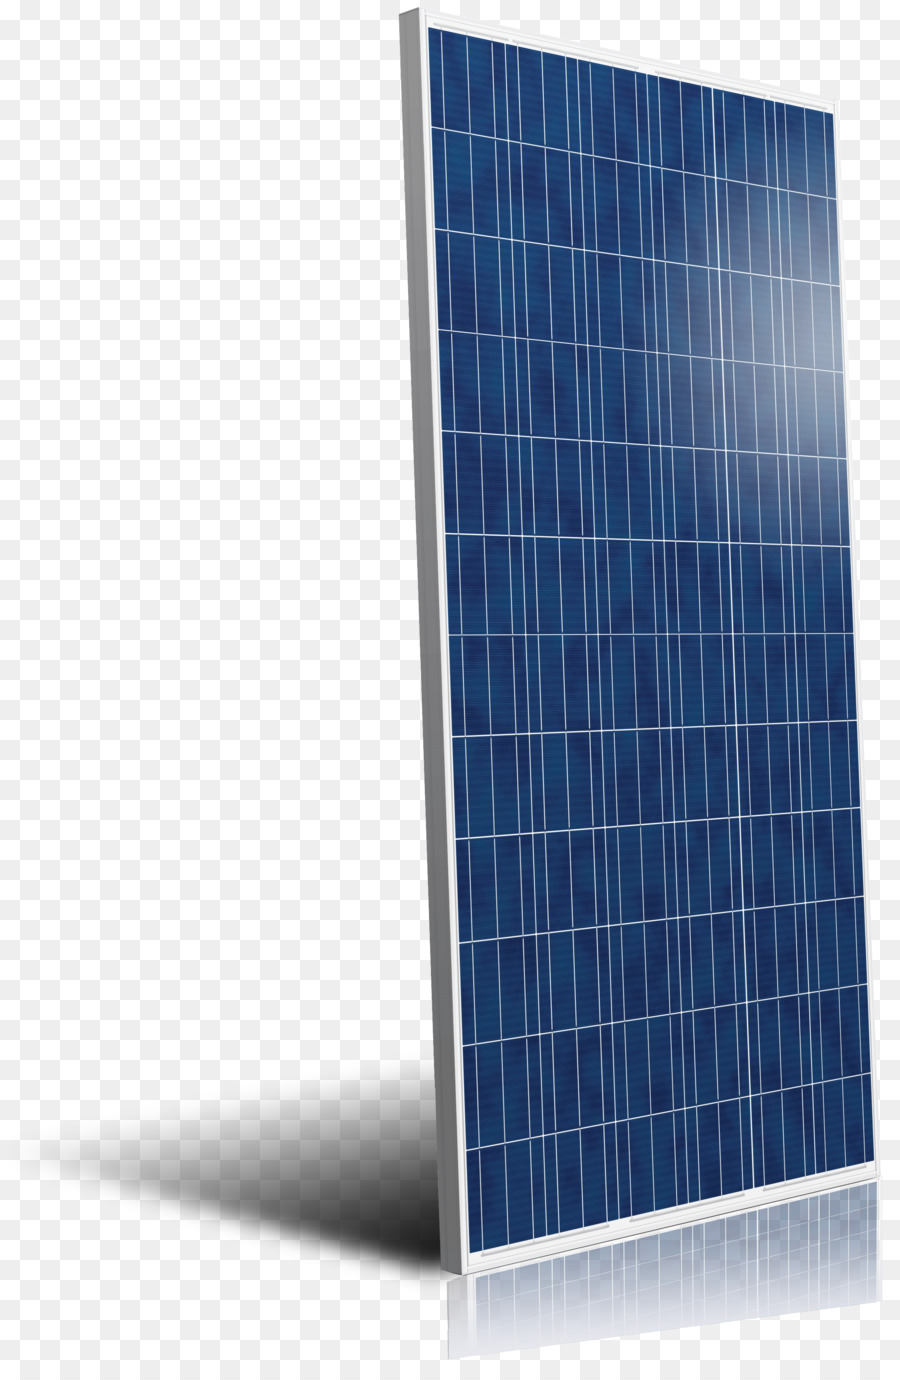 Solarstrom Solarmodule Solarenergie sunpower - solar panel